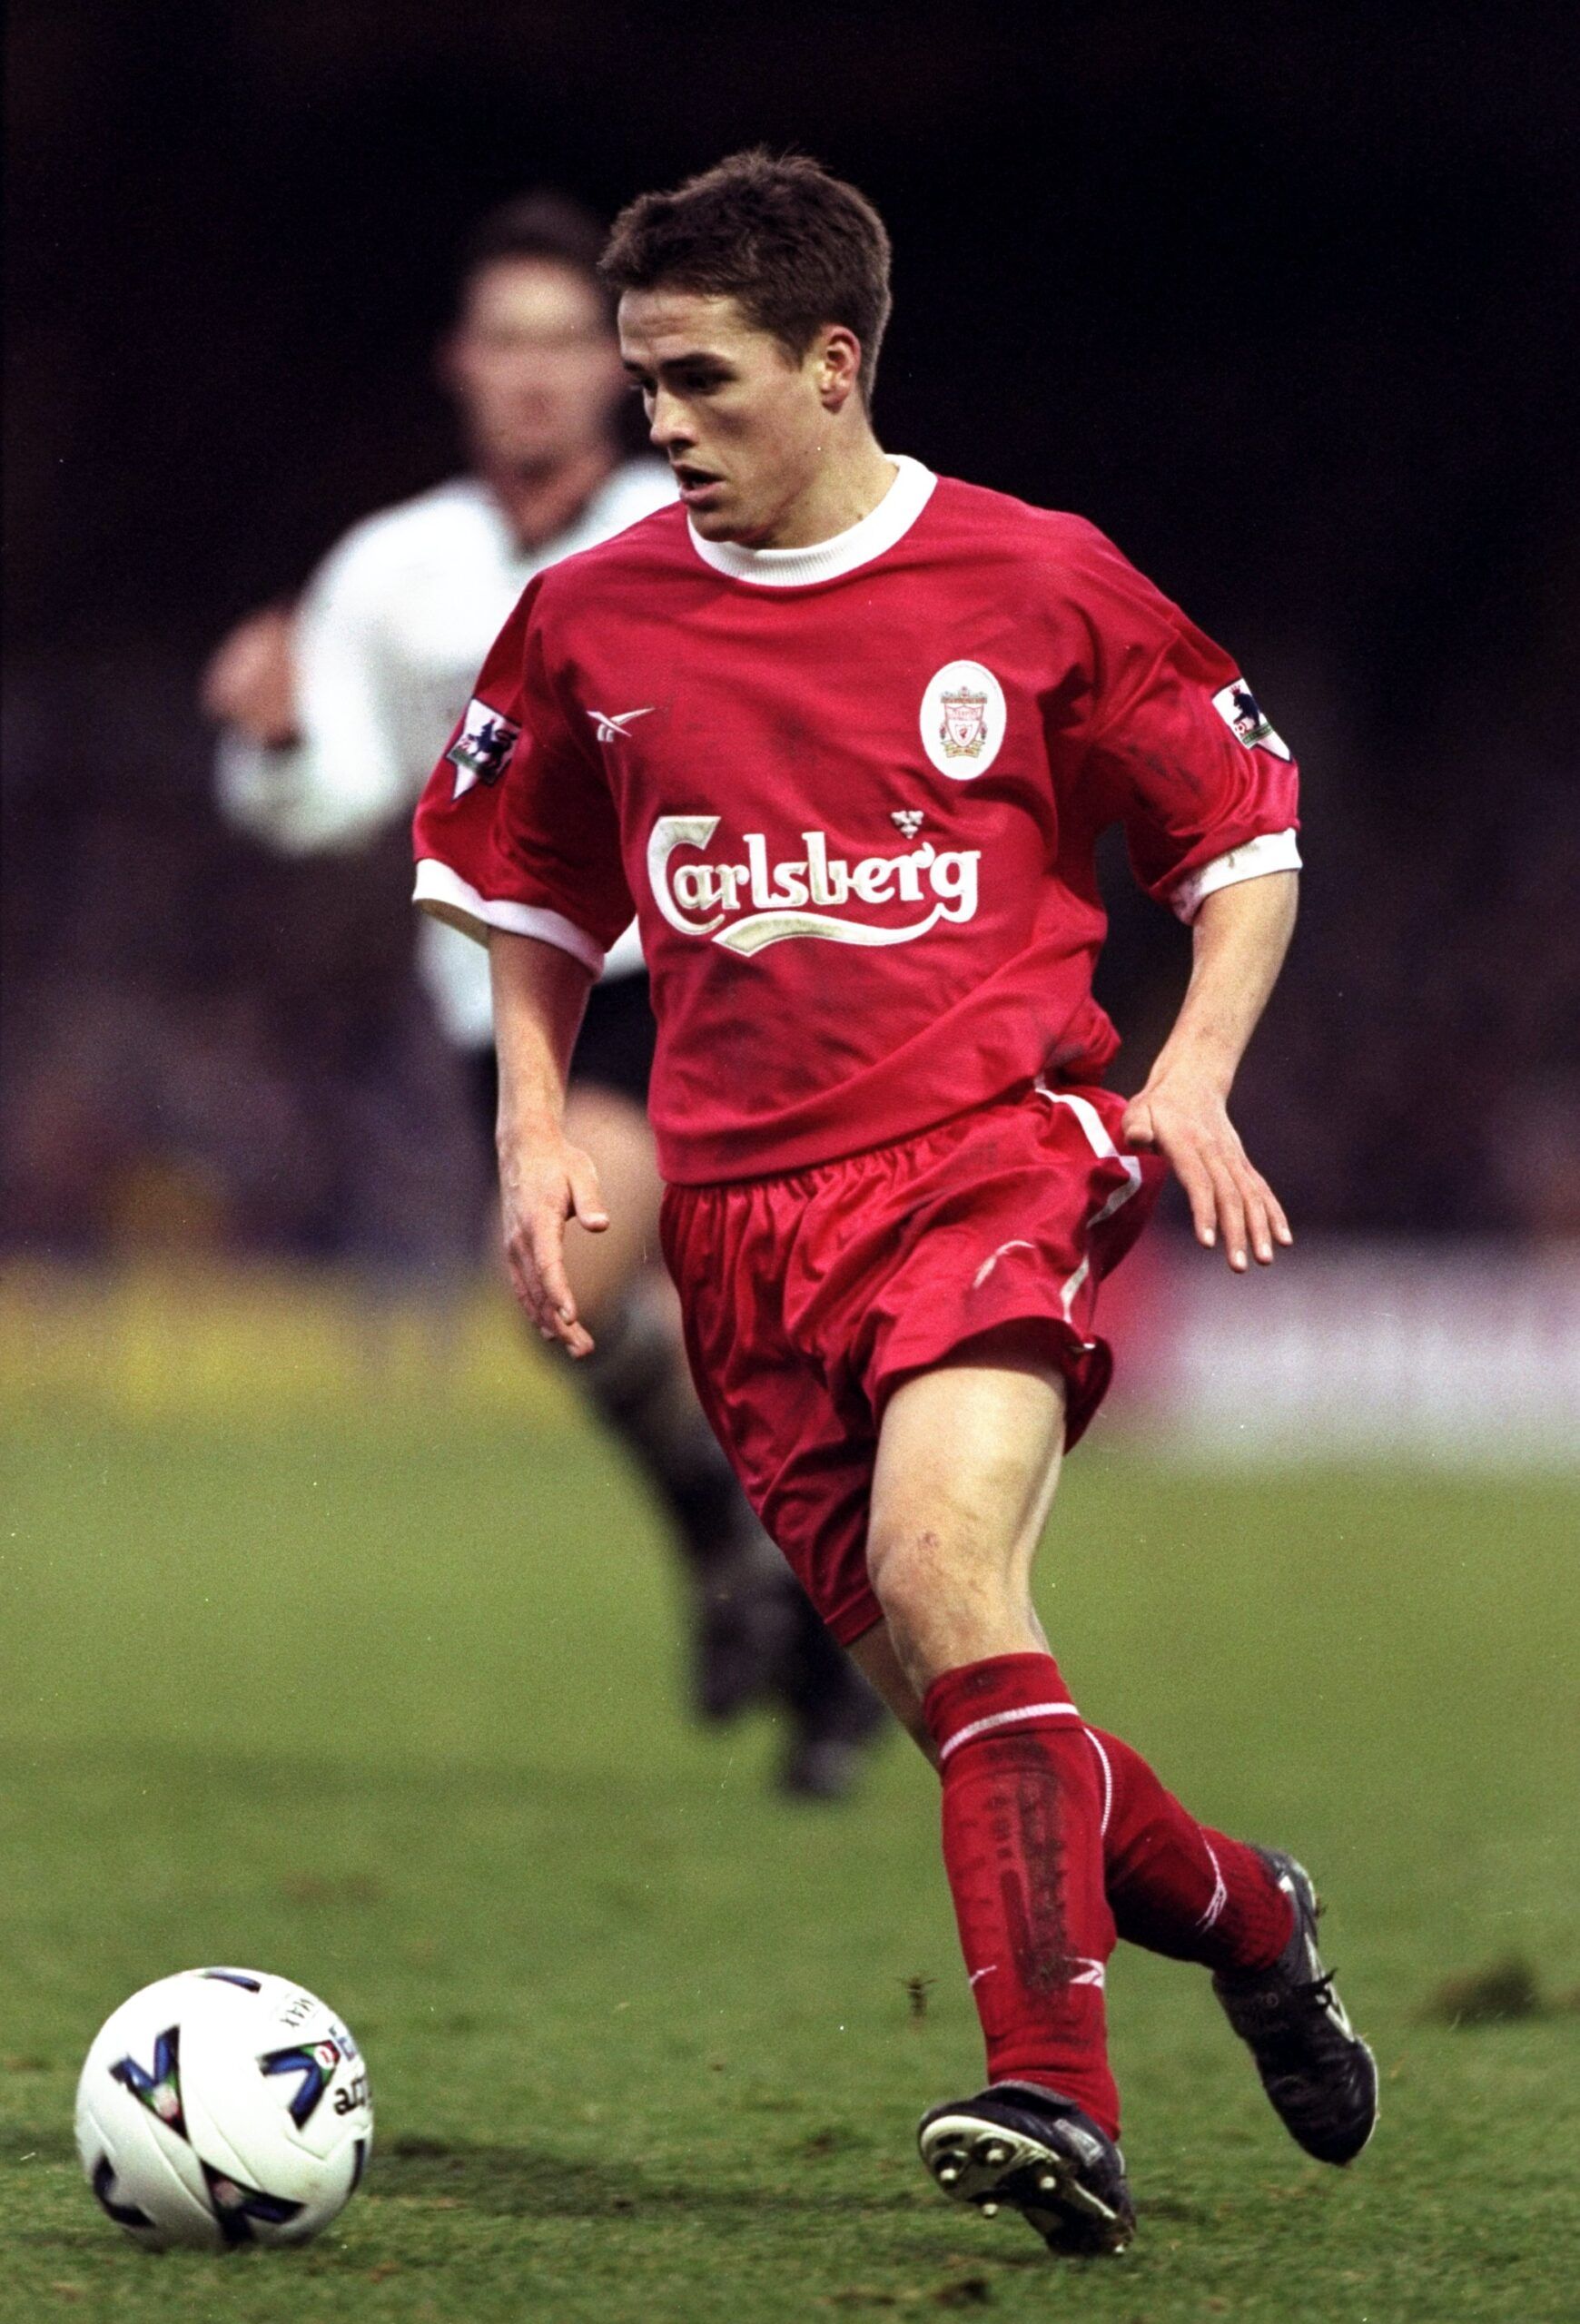 Owen playing in a 1990s Reebok Liverpool shirt.